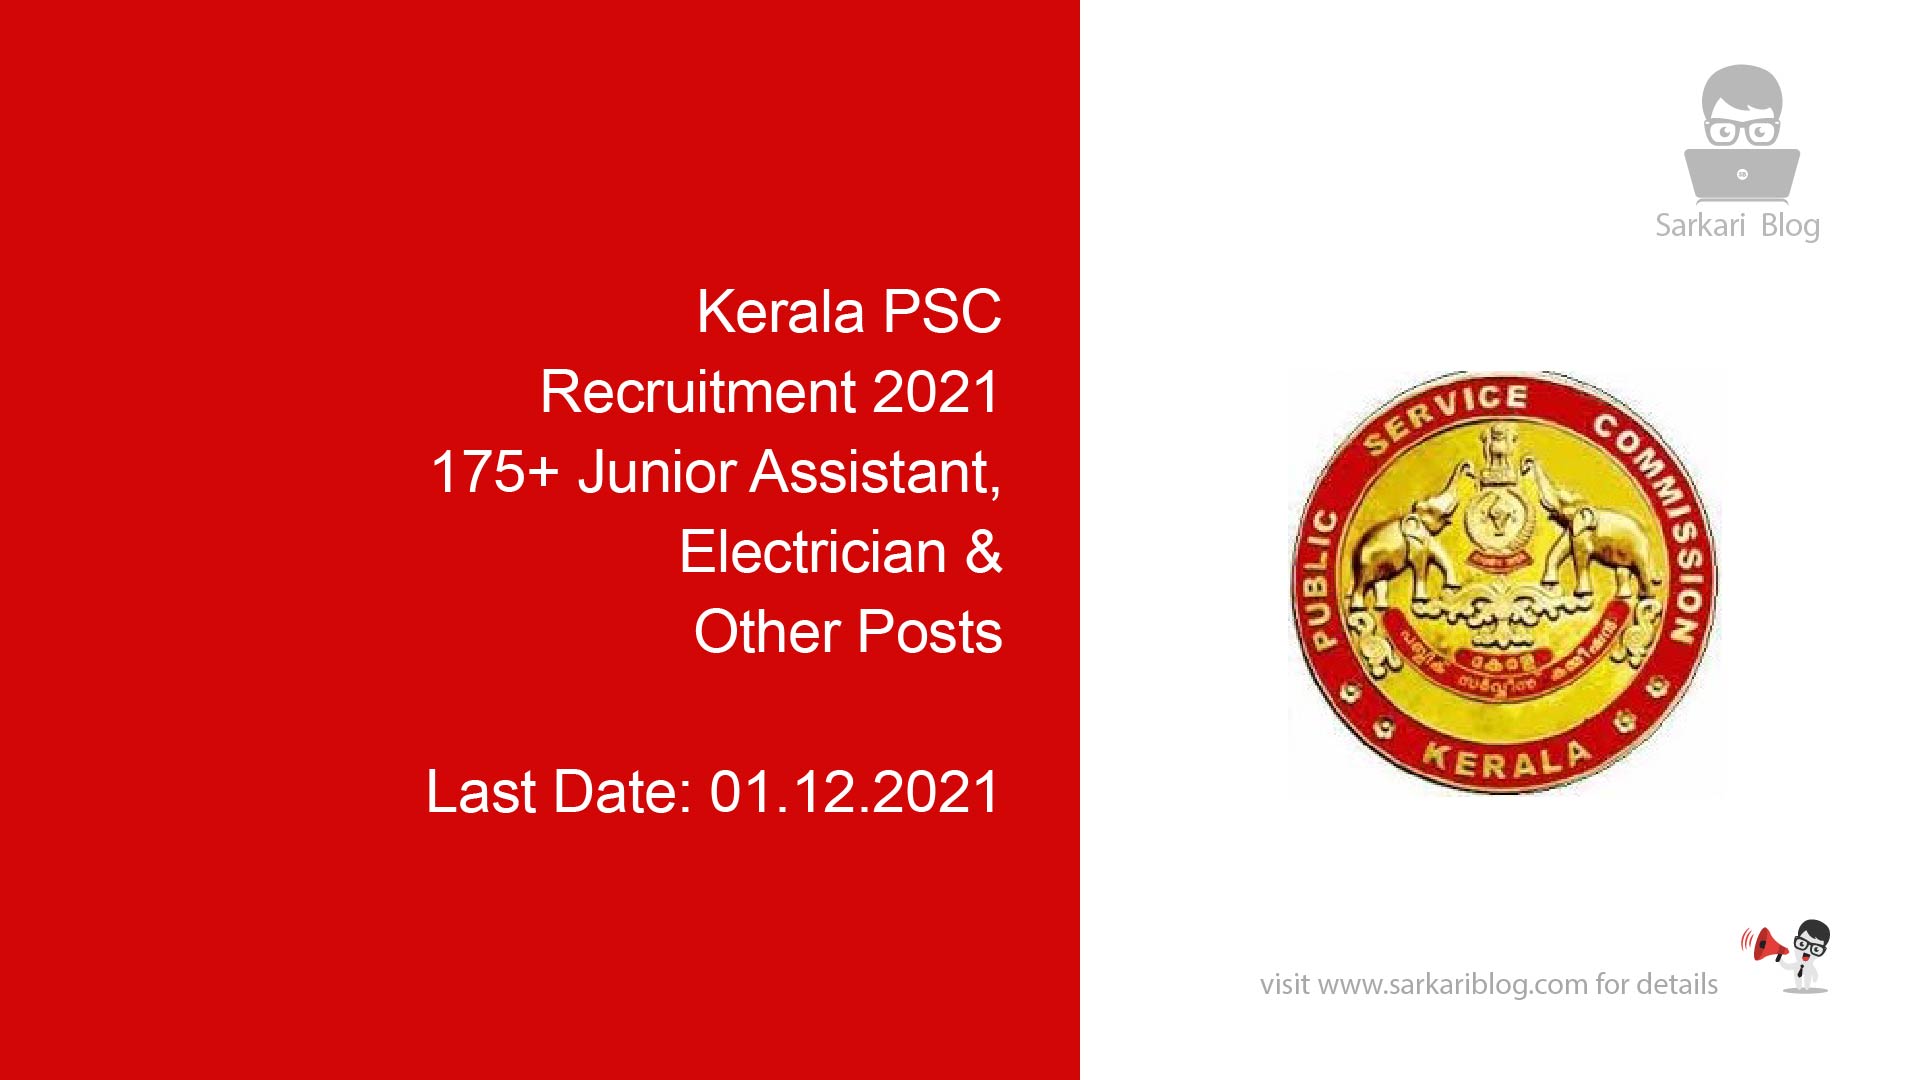 KPSC Recruitment 2021